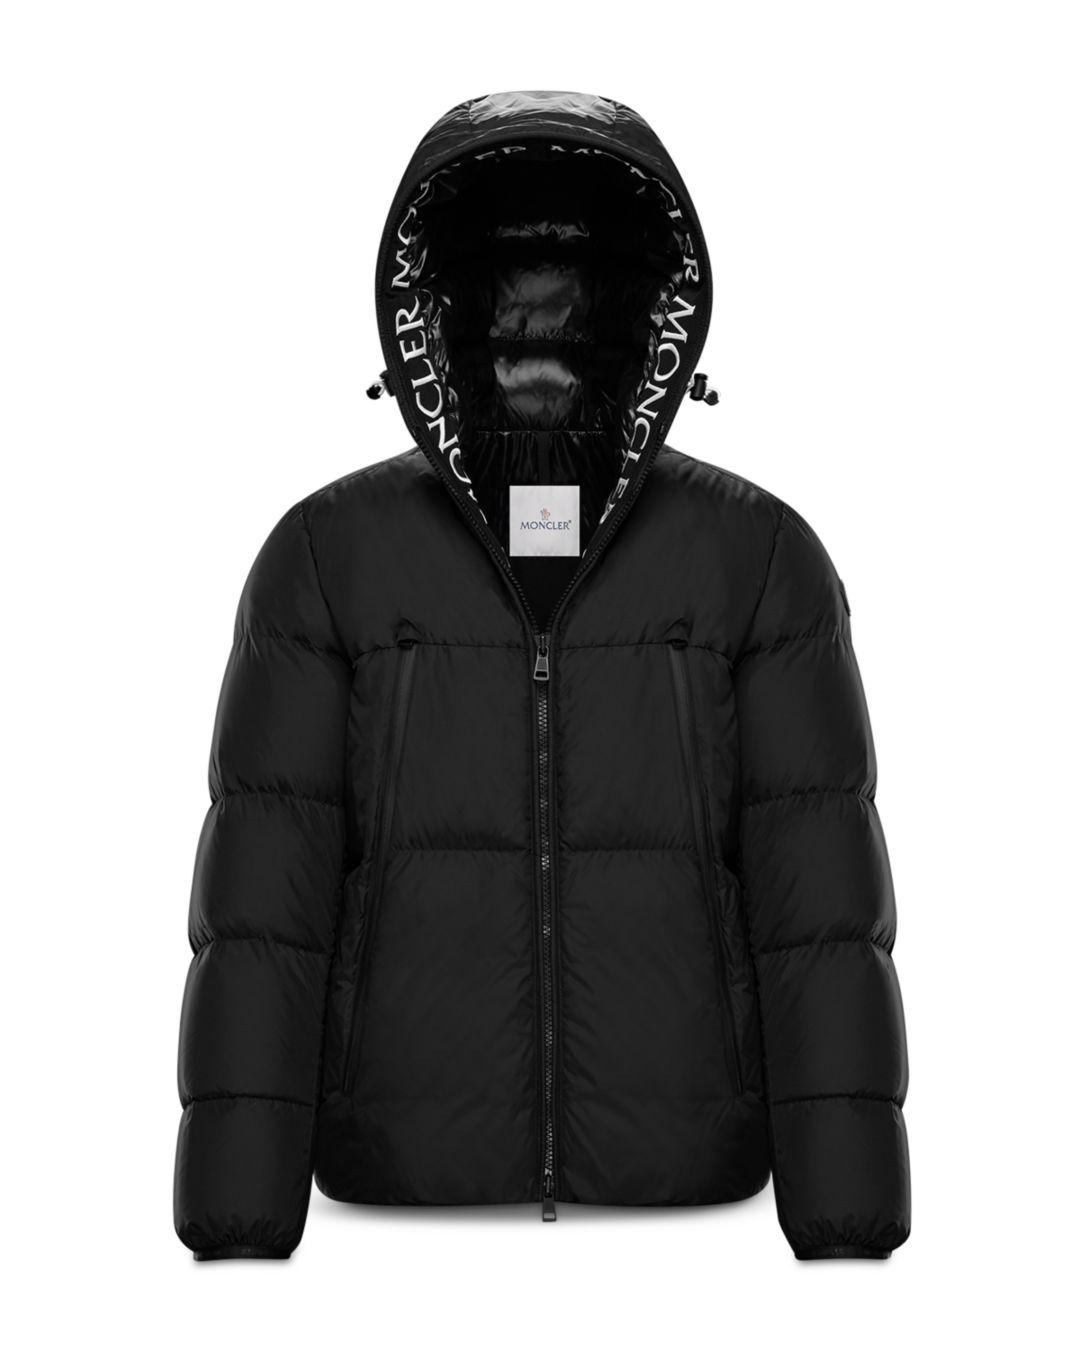 Moncler Synthetic Montcla Down Jacket in Black for Men - Save 16 